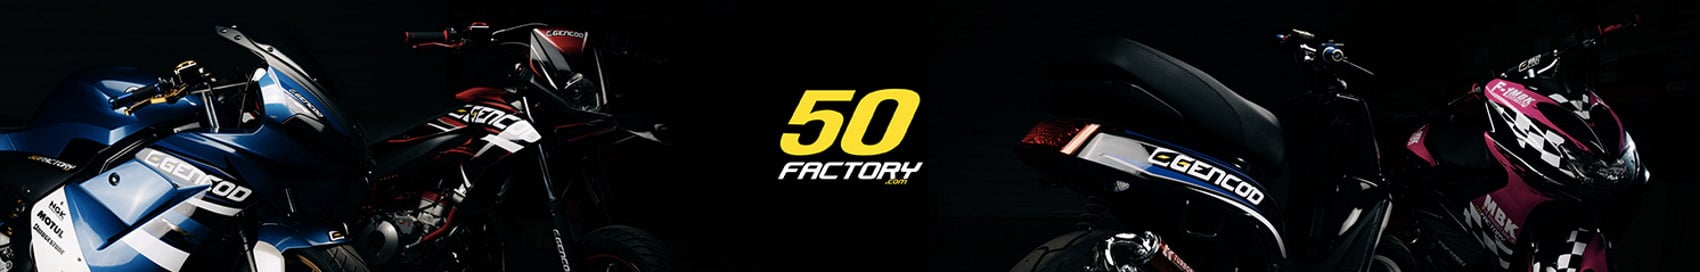 informazioni generali su 50 Factory